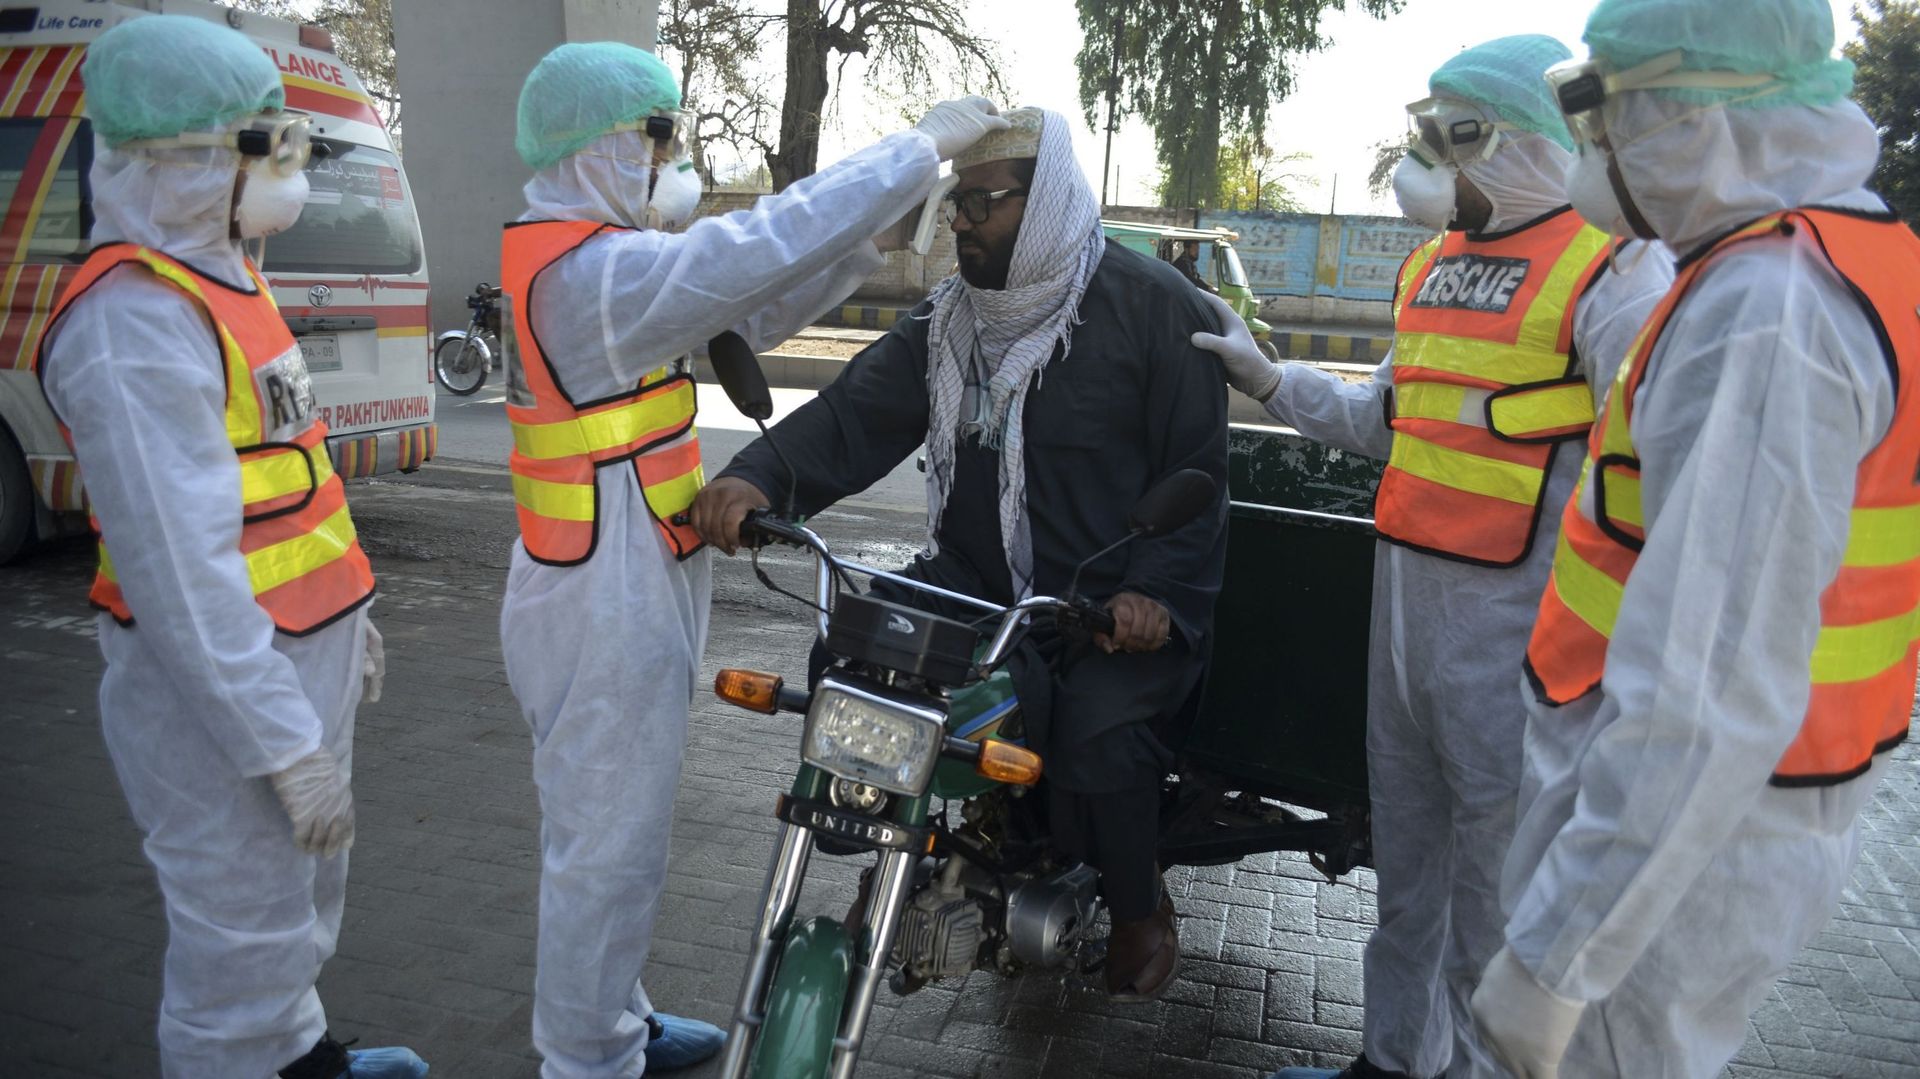 Coronavirus: le flou persiste autour de la situation en Iran